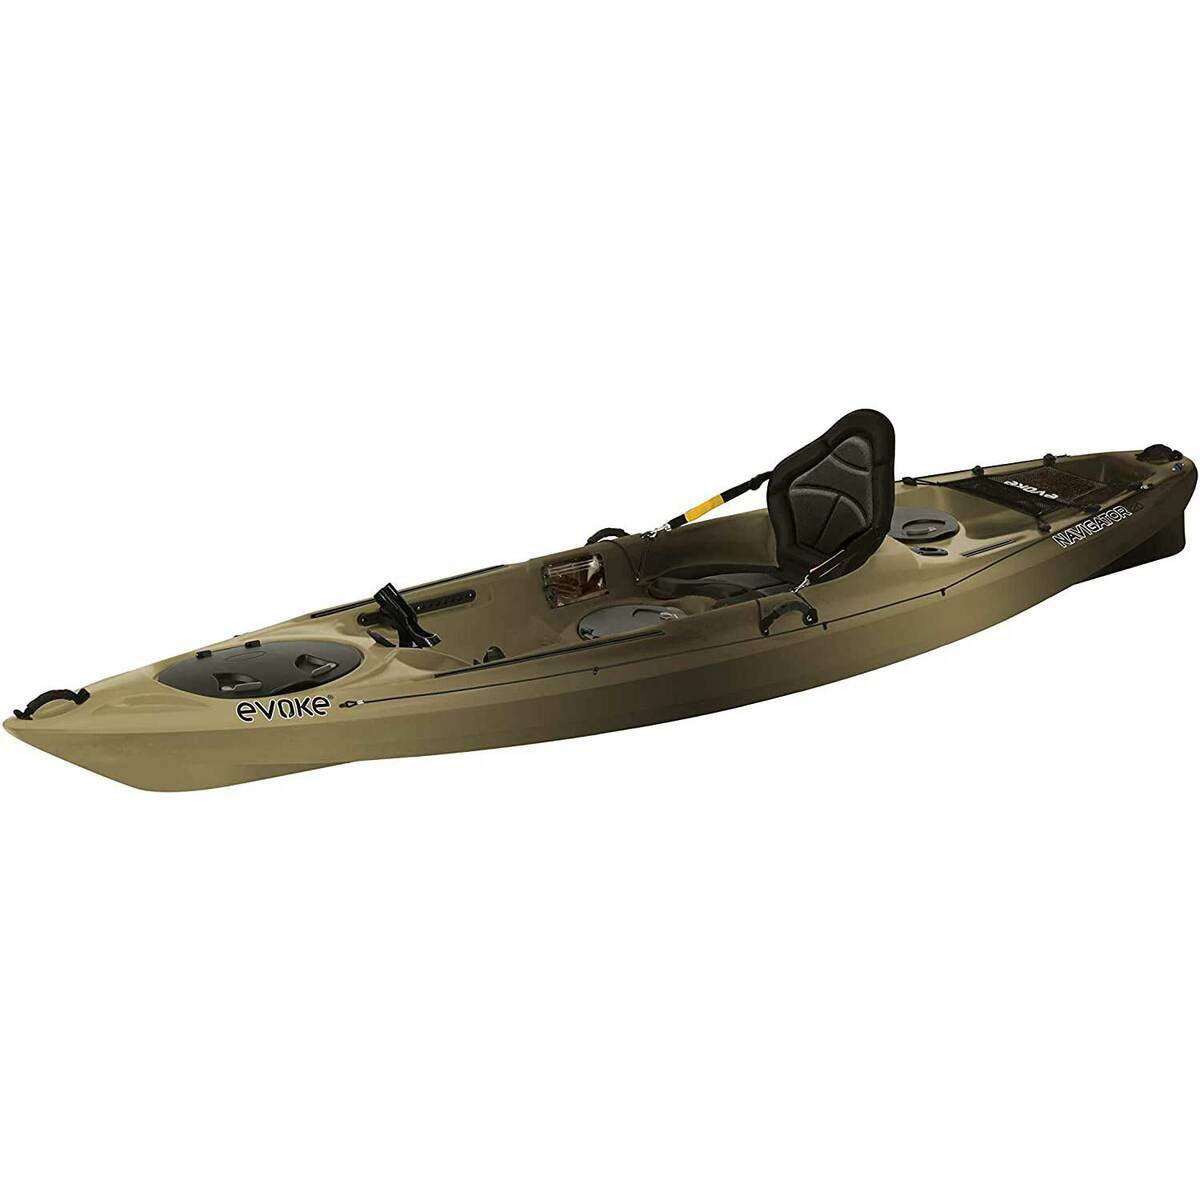 https://www.sportsmans.com/medias/evoke-navigator-120-sit-on-top-kayak-123ft-camo-1697419-1.jpg?context=bWFzdGVyfGltYWdlc3w0MjY0MHxpbWFnZS9qcGVnfGFEazVMMmhsWlM4NU9UYzBOalEzTlRJeE16RXdMekUyT1RjME1Ua3RNVjlpWVhObExXTnZiblpsY25OcGIyNUdiM0p0WVhSZk1USXdNQzFqYjI1MlpYSnphVzl1Um05eWJXRjB8MDY2NjJlNmYzMjIyNmVhNTM2YmQ2YjA0NTIyYzQyMTVjMjhkN2RjMmI5Zjk3Y2M4ZTBlNWM0YjQ2ZTRjYTNiYQ